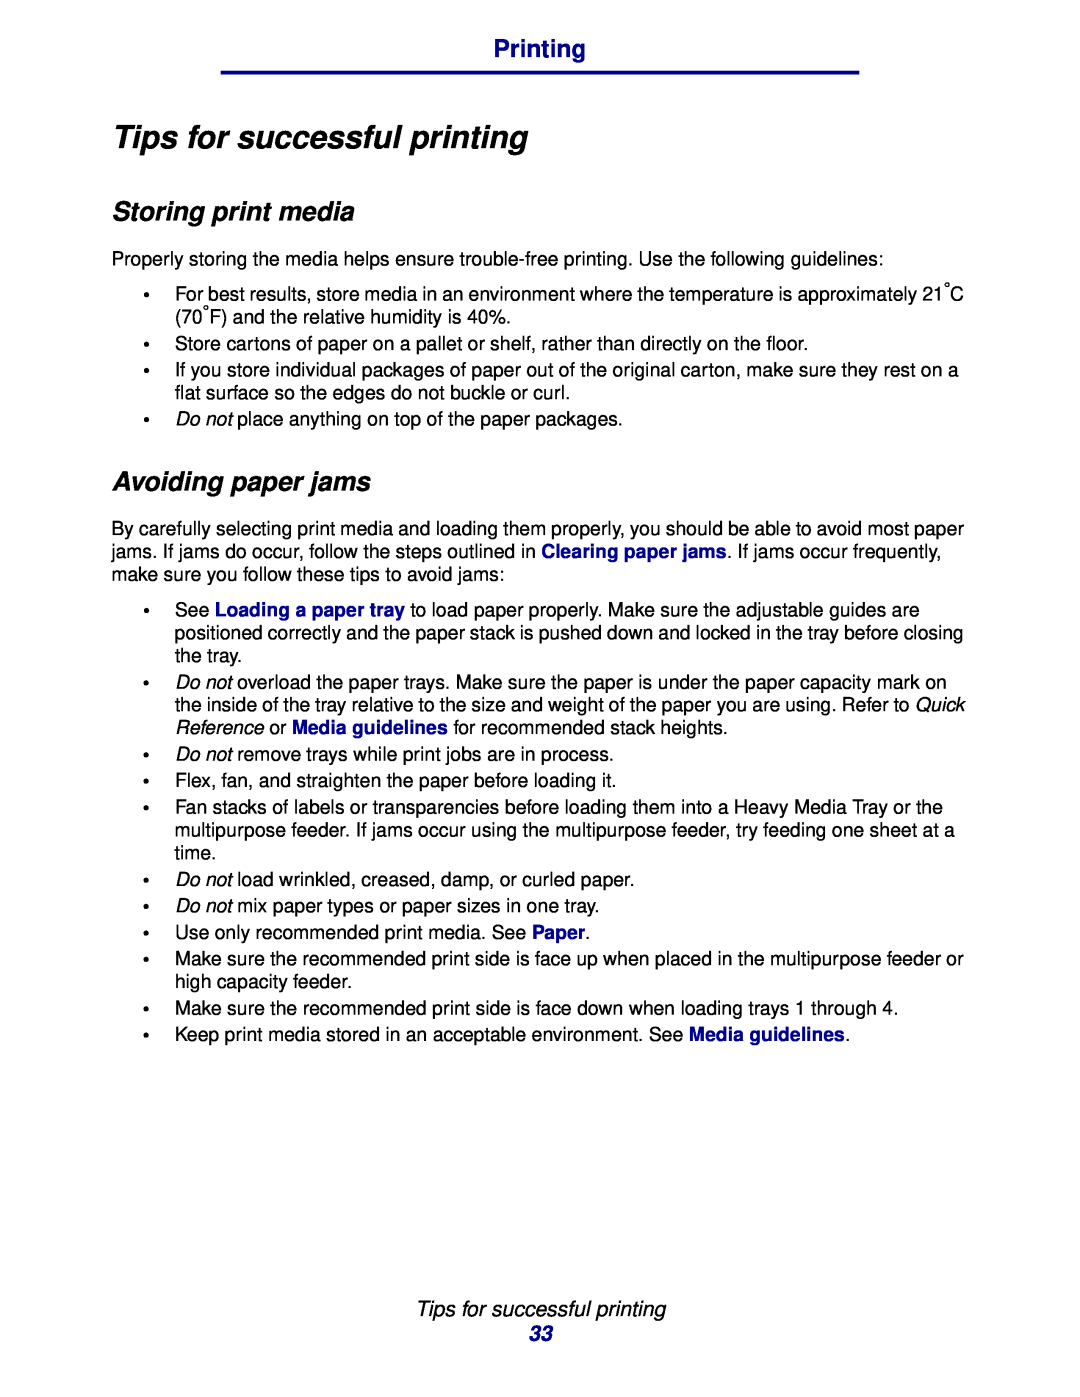 Lexmark 912 manual Tips for successful printing, Storing print media, Avoiding paper jams, Printing 